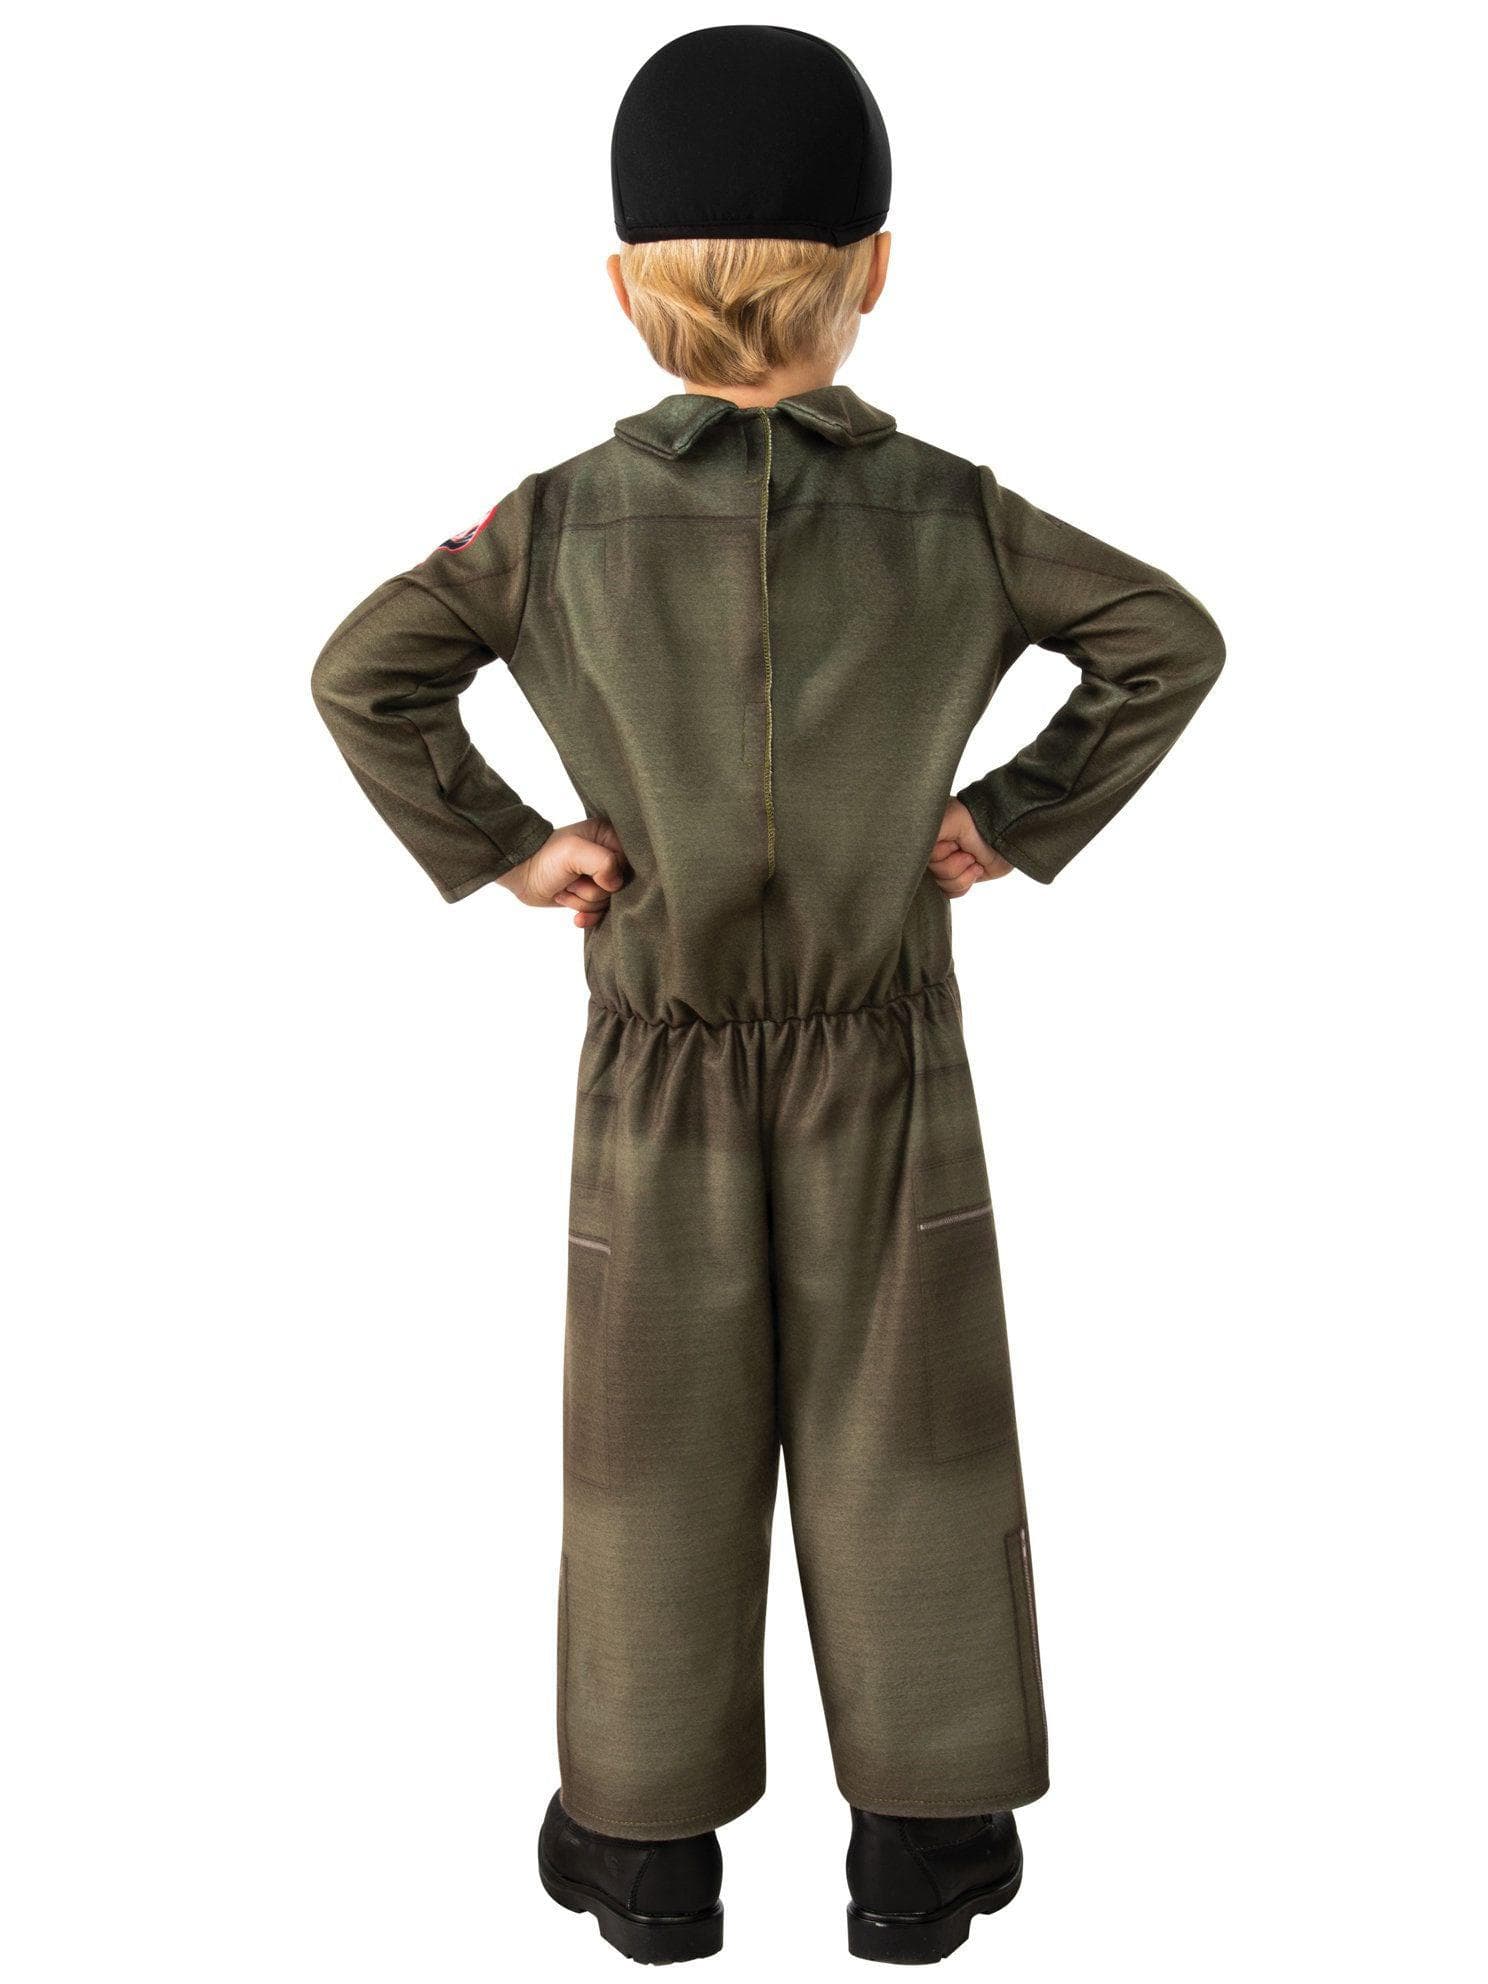 Baby/Toddler Top Gun Costume - costumes.com